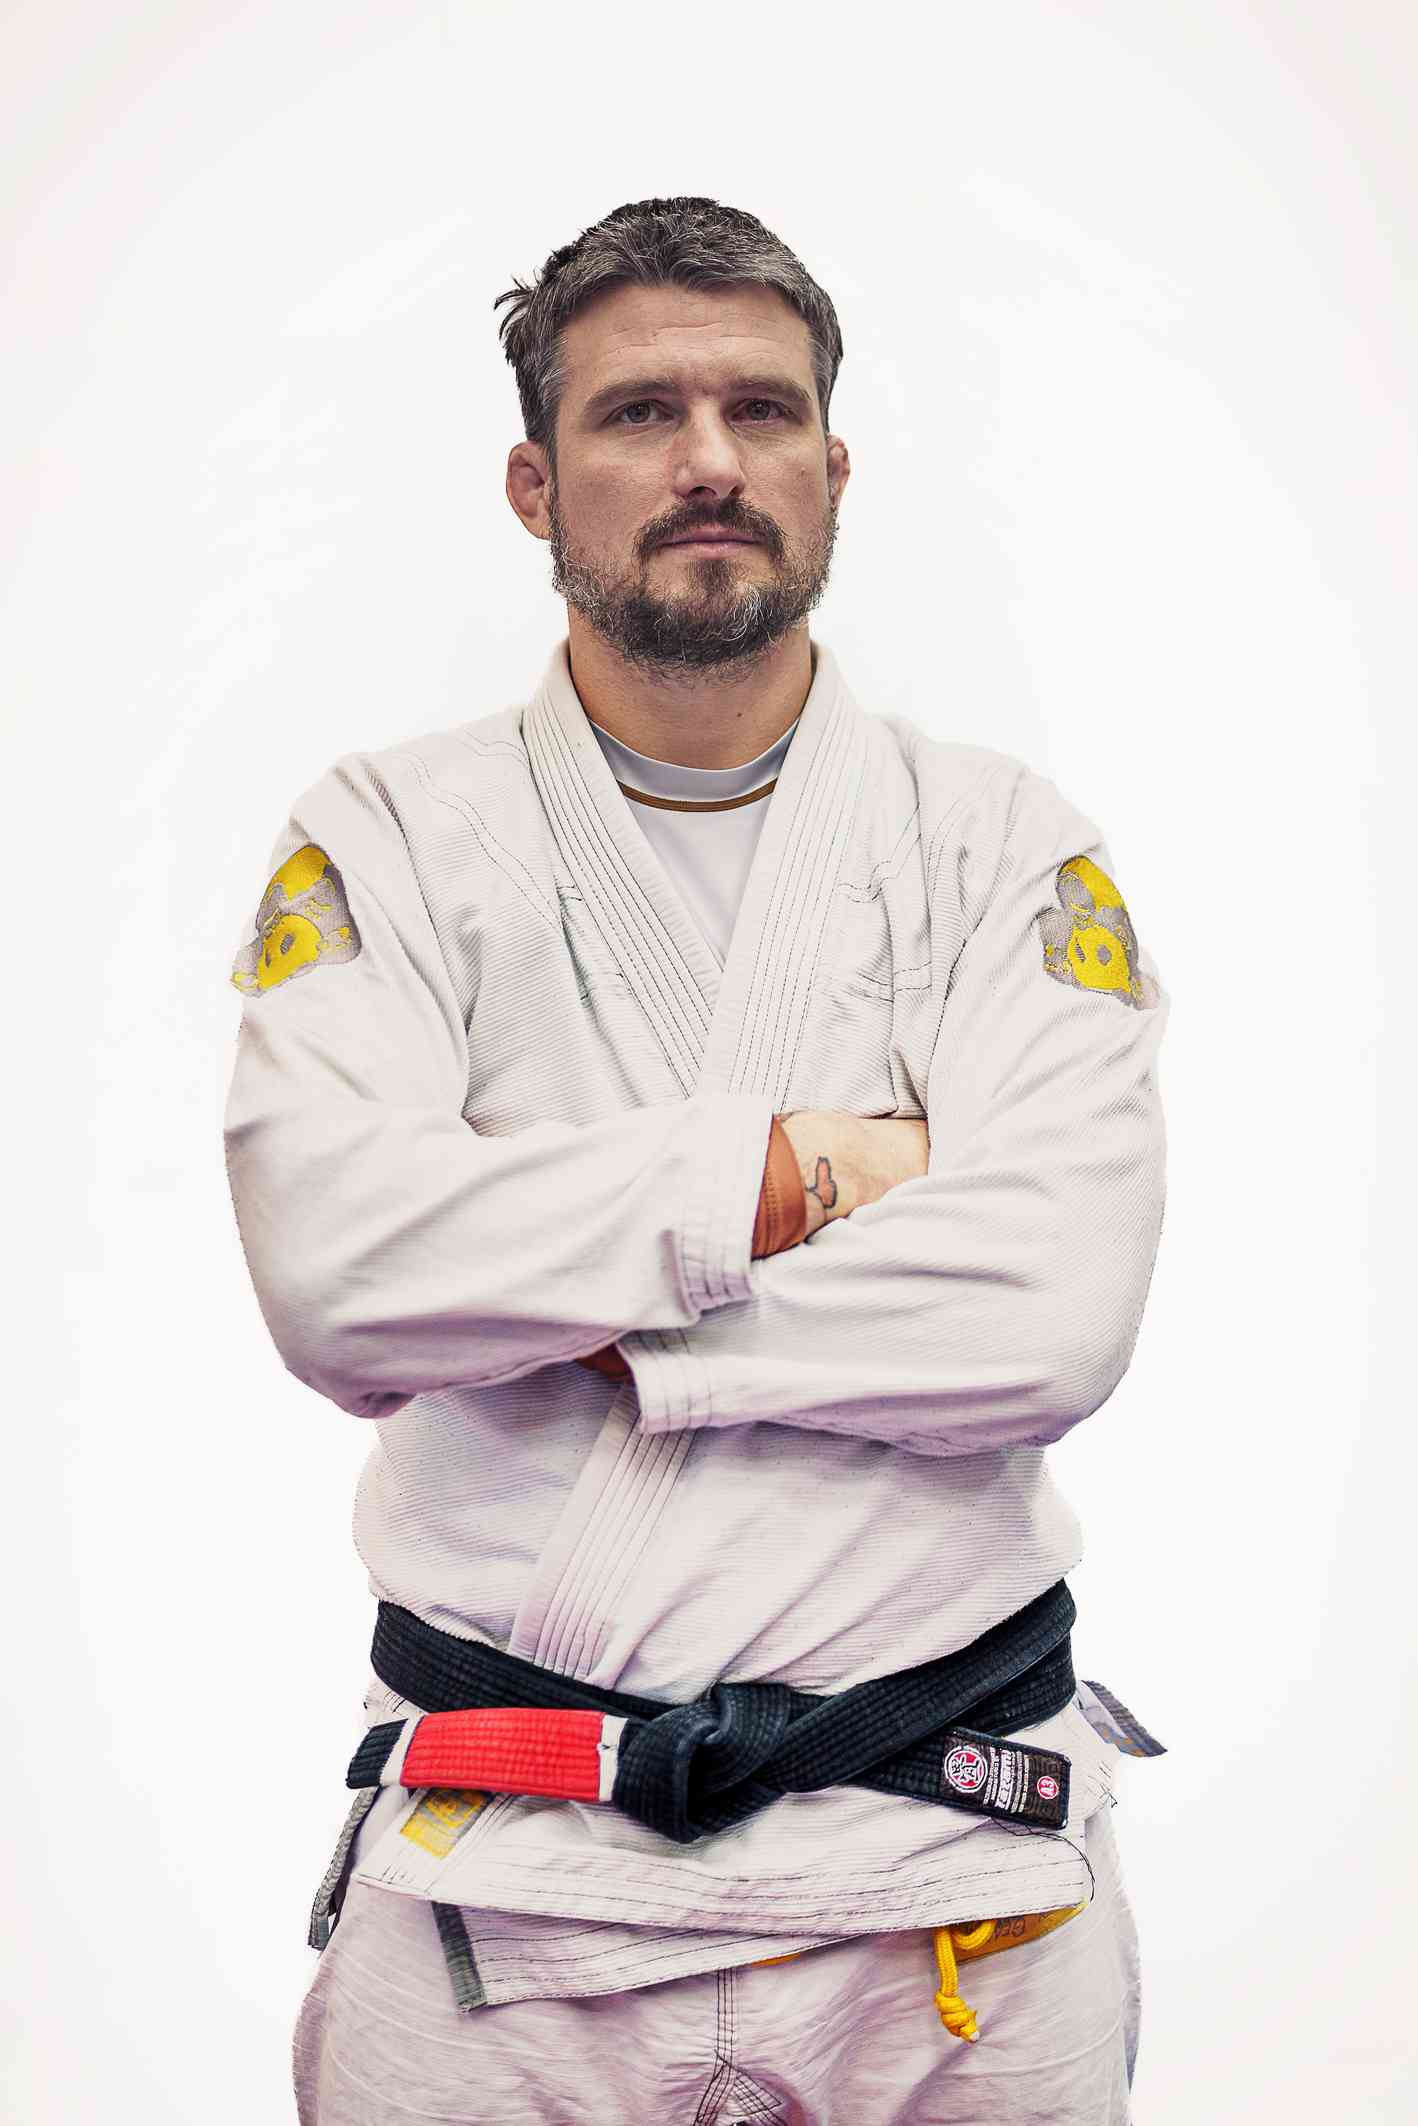 Brown belt Jiu Jitsu instructor from Warsaw